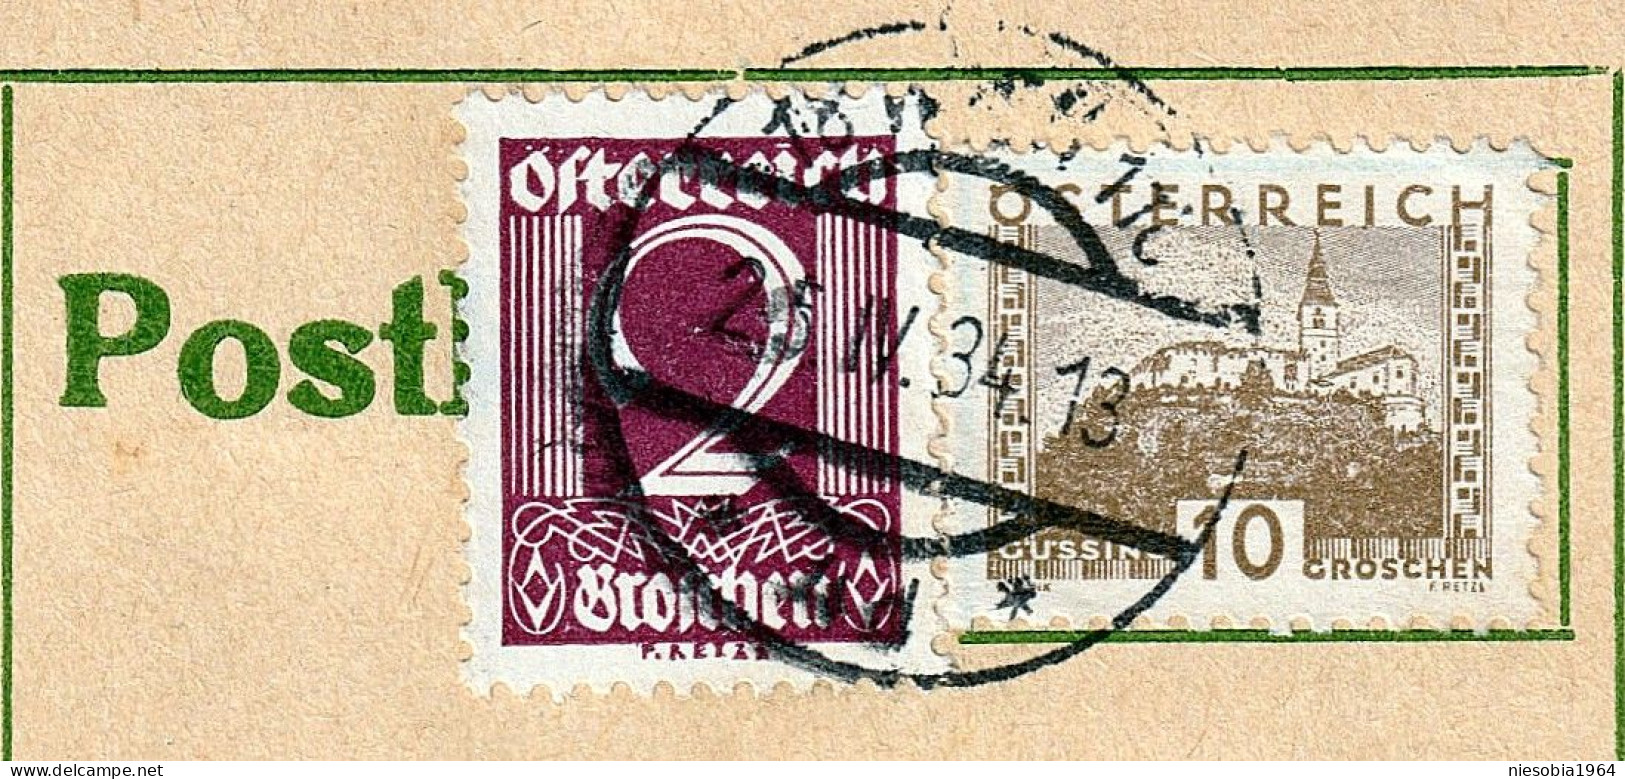 Österreich Postkarte + 2 Marke 10 Groschen & 2 Kronen, Wien 25 IV 1934 - Covers & Documents